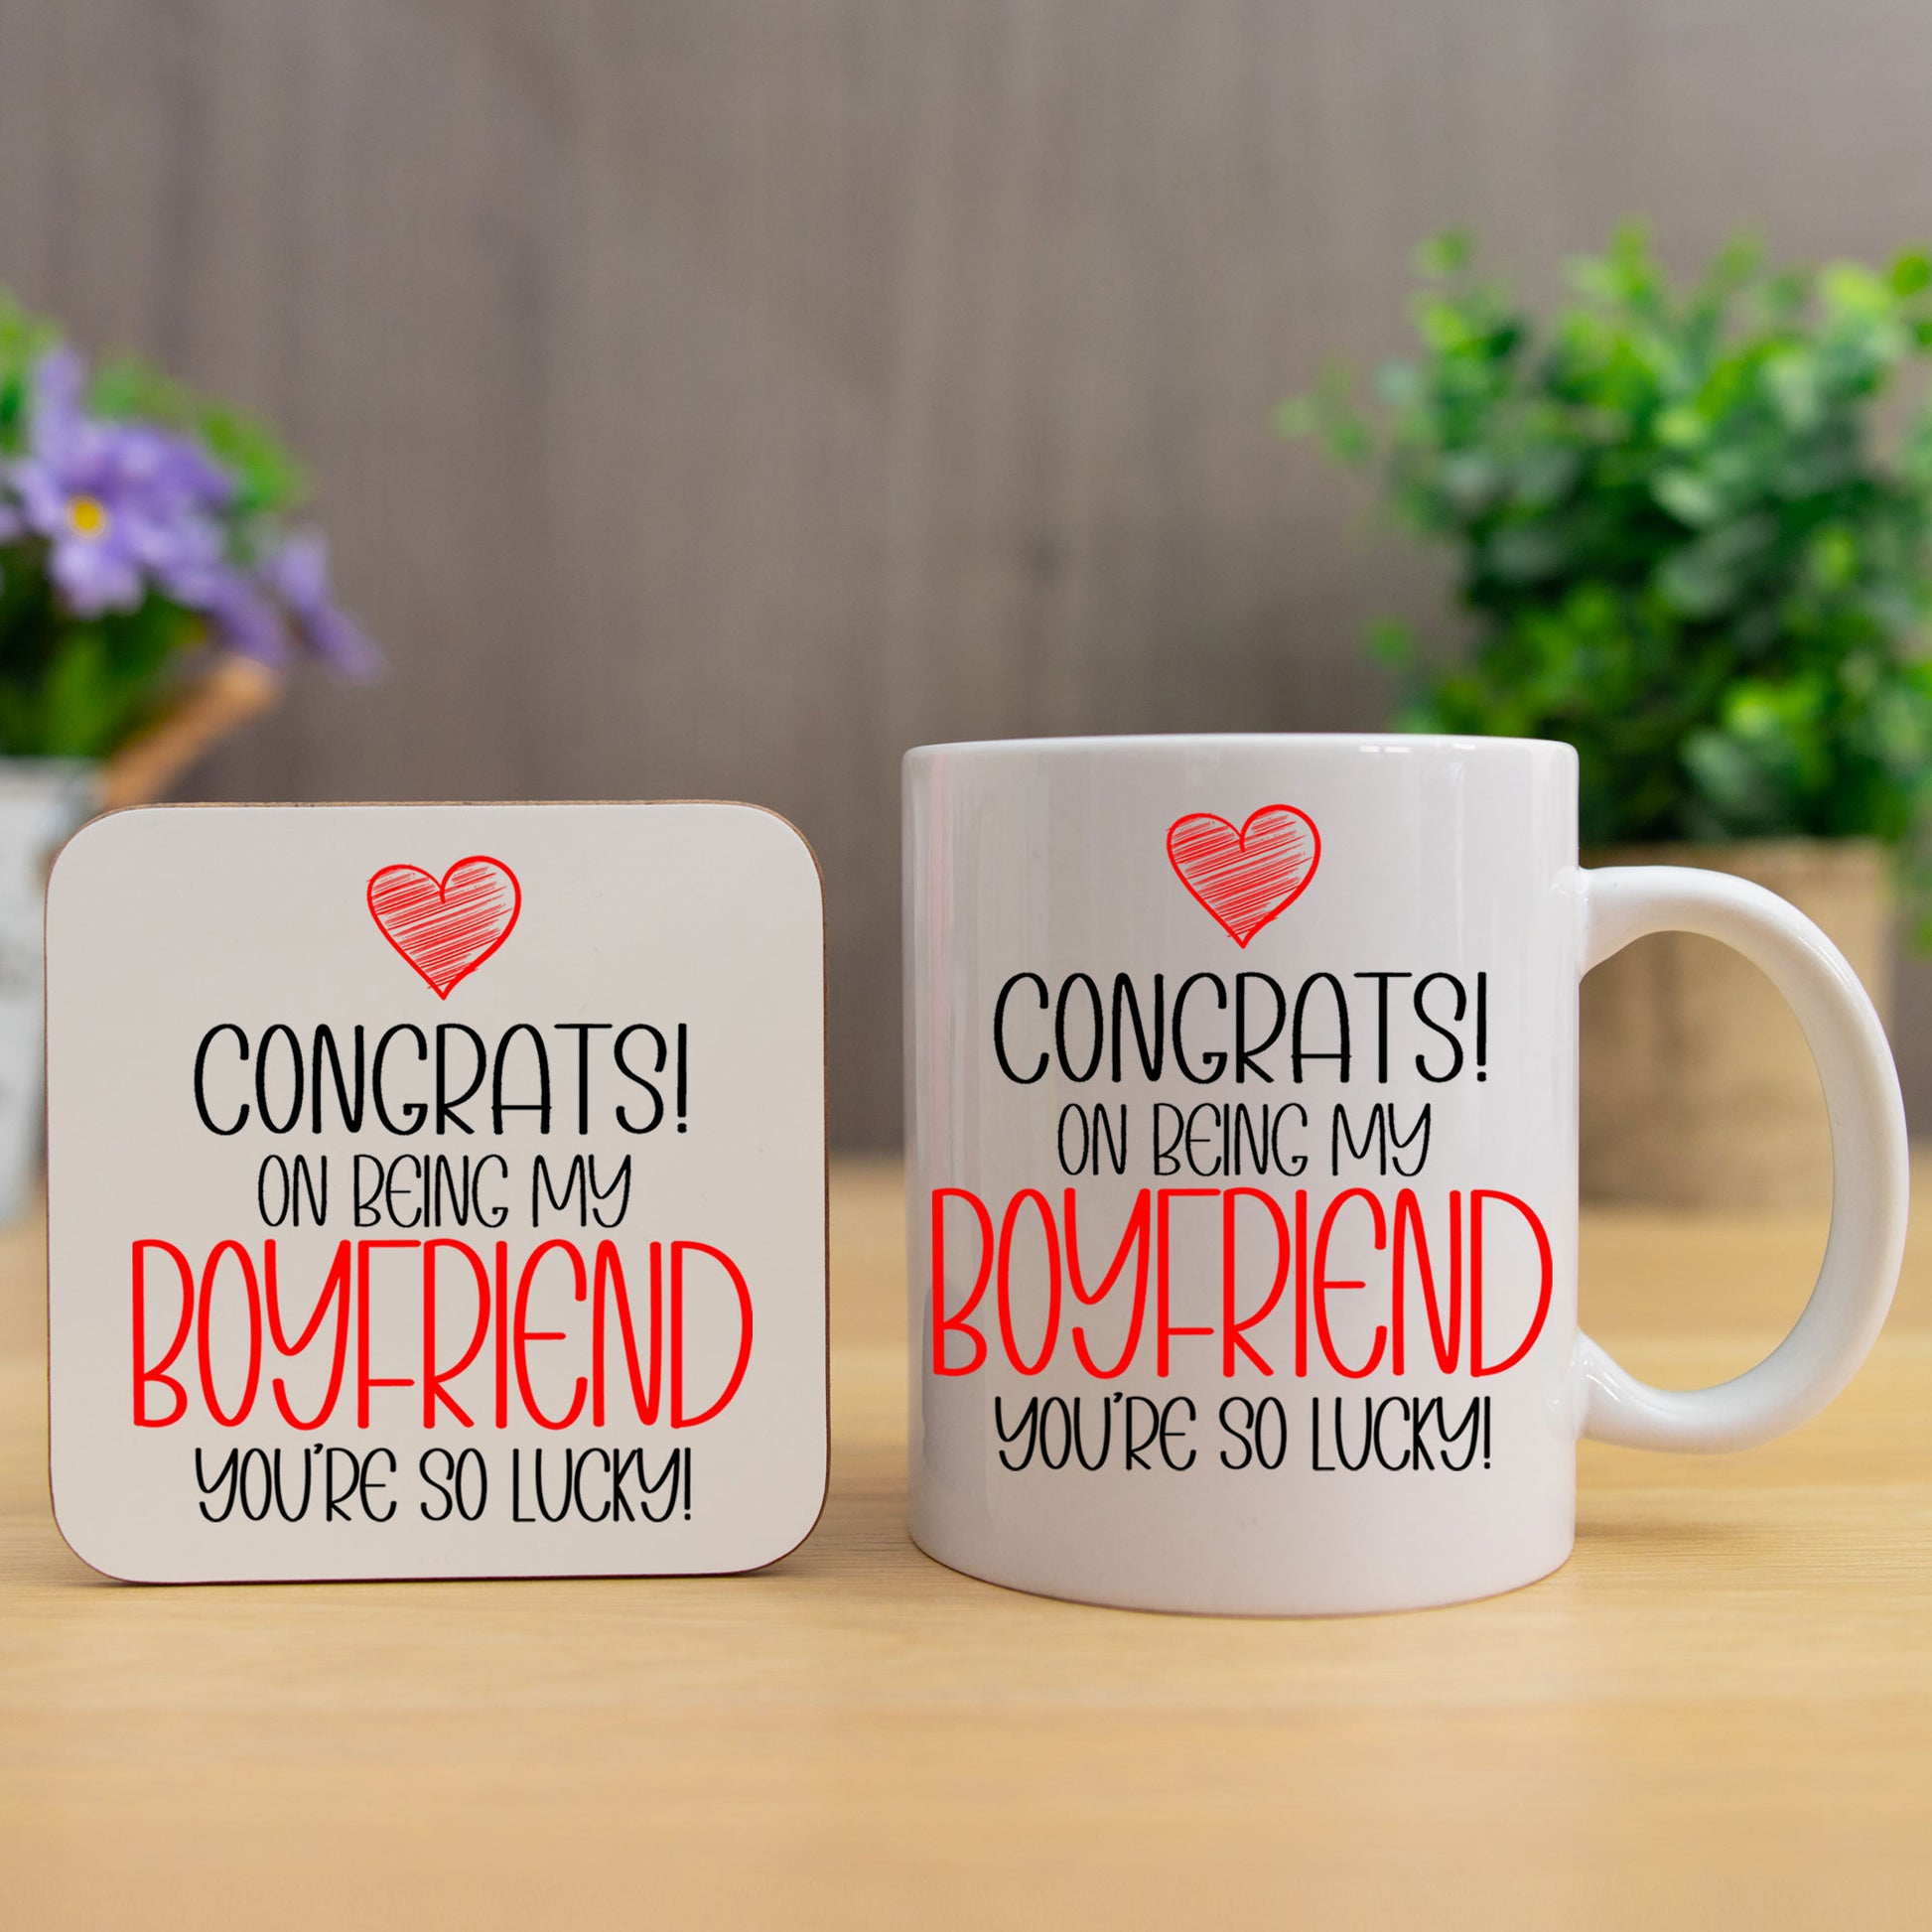 Congrats On Being My Boyfriend Mug and/or Coaster Gift  - Always Looking Good - So Lucky Mug & Coaster Set  